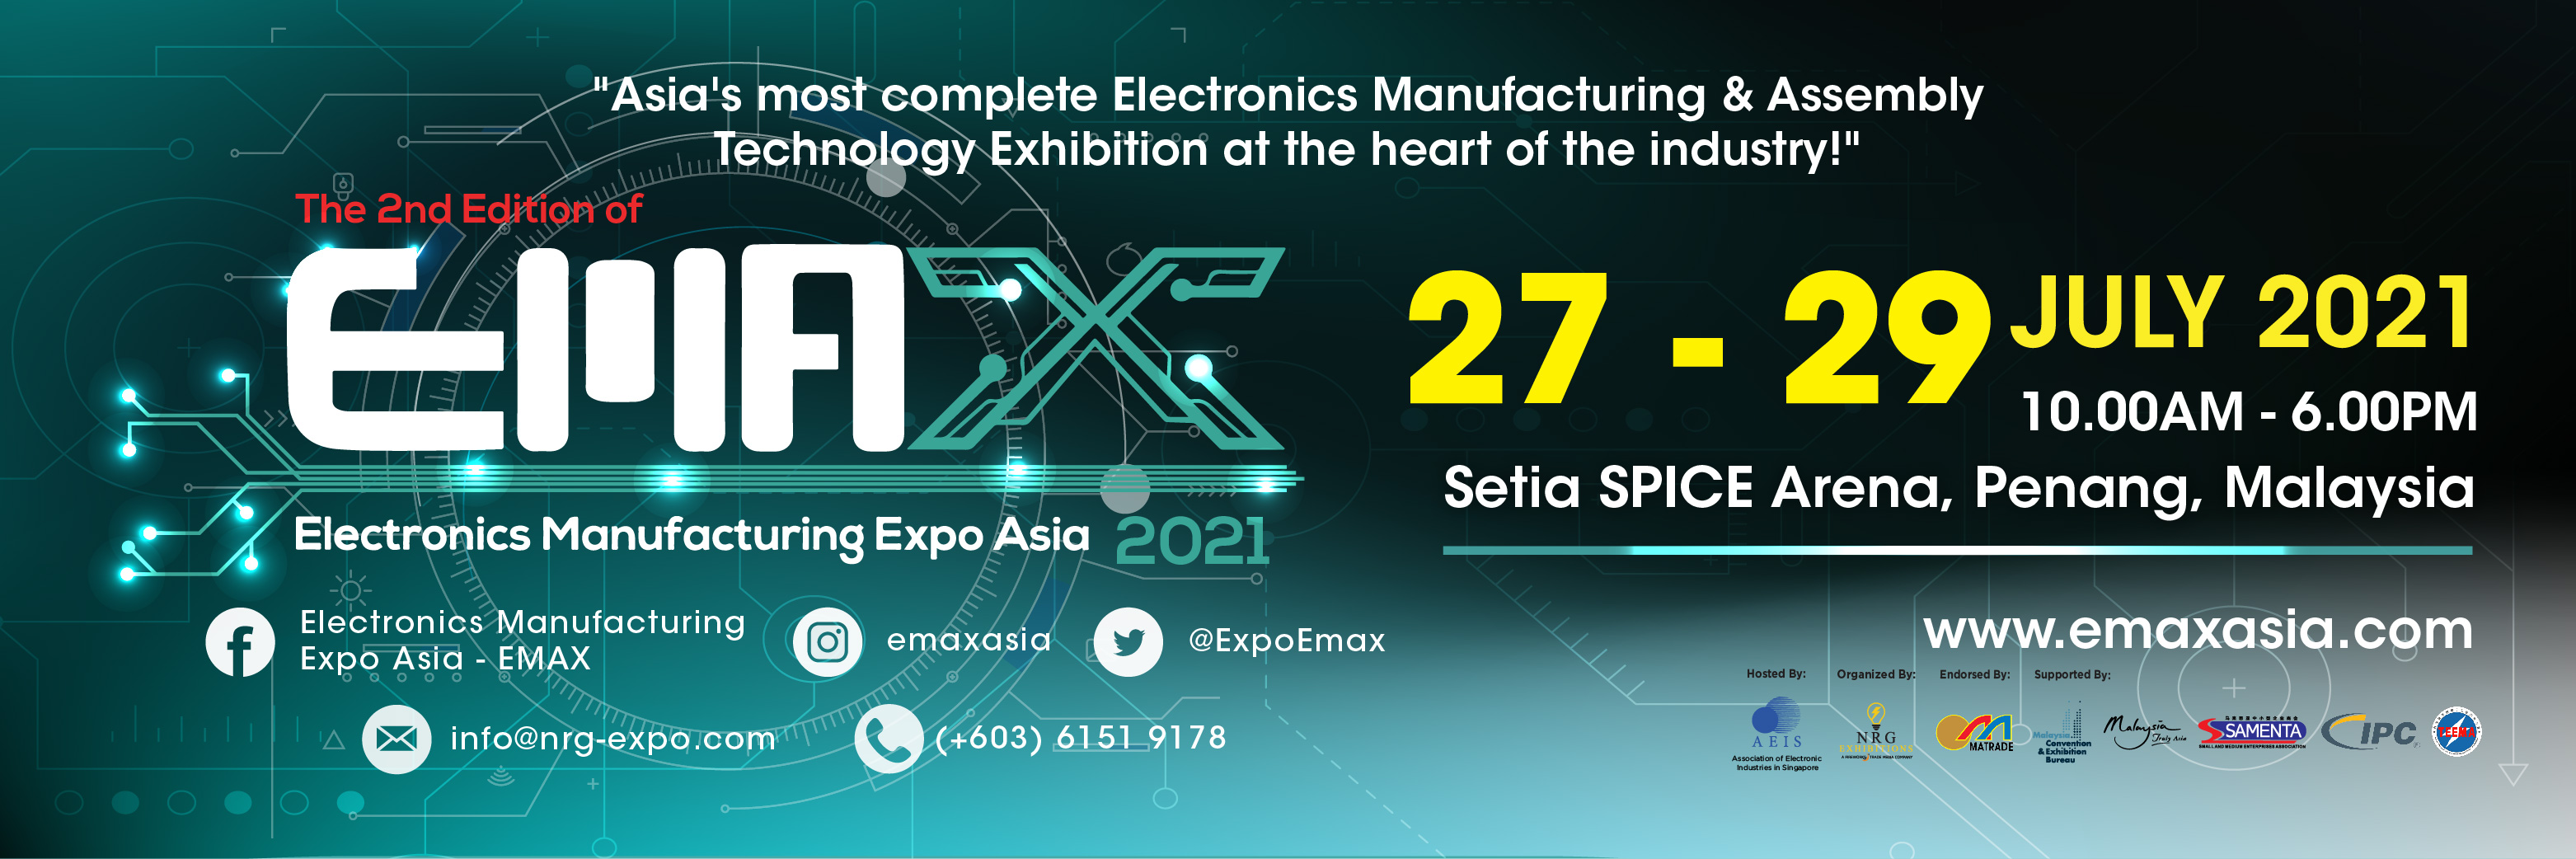 Electronics Manufacturing Expo Asia (EMAX) 2021, Setia SPICE Arena, Pulau Pinang, Malaysia